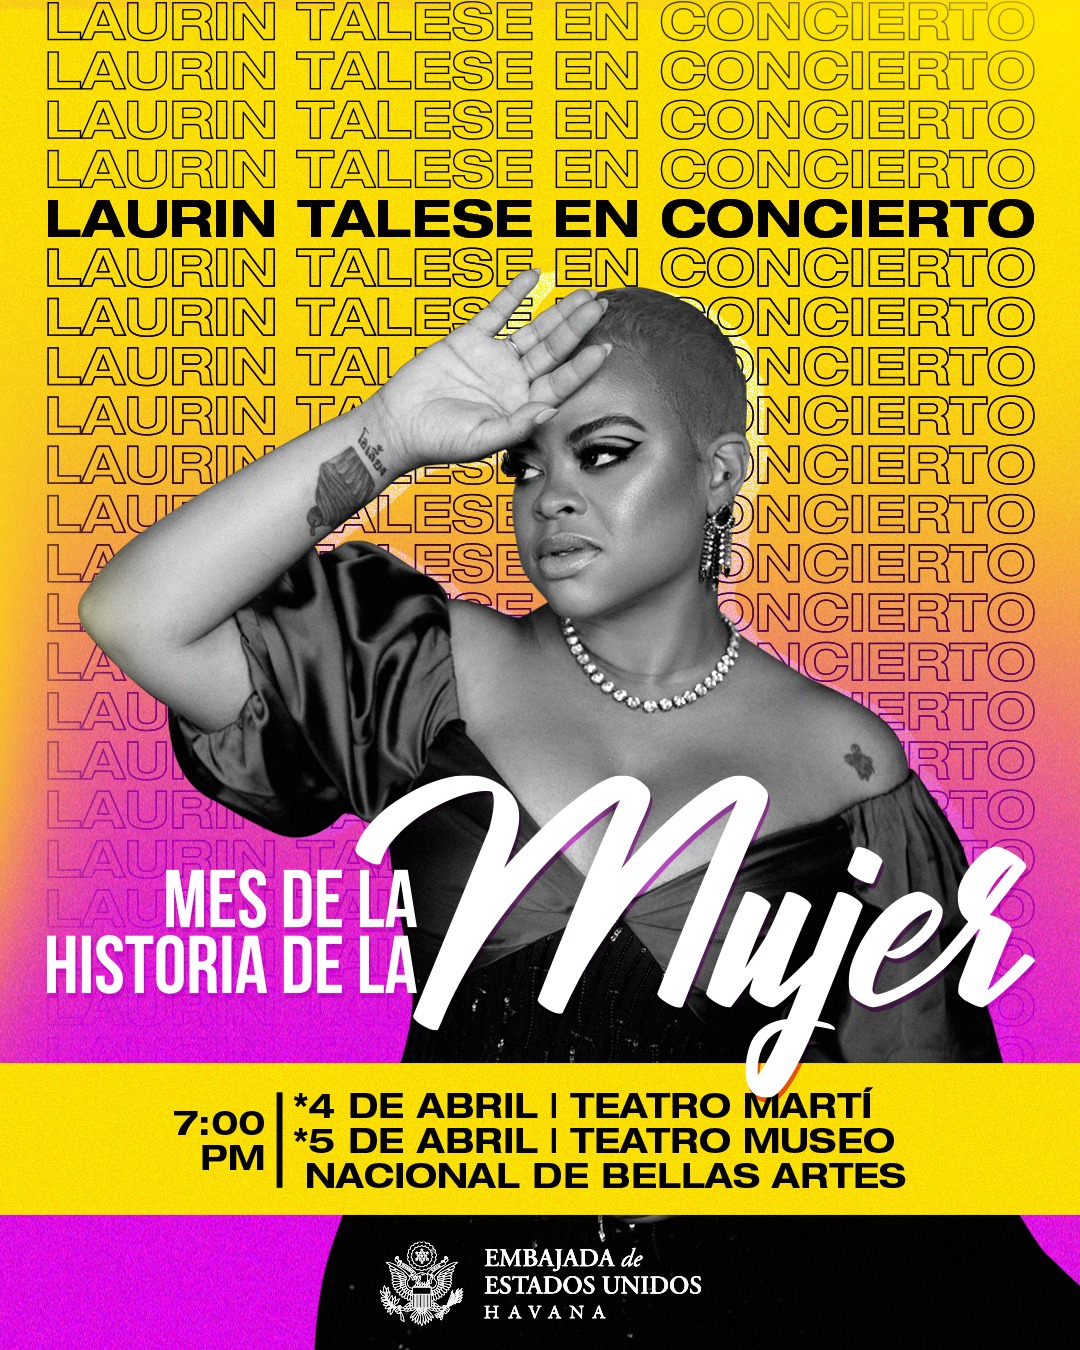 Laurin Talese en La Habana